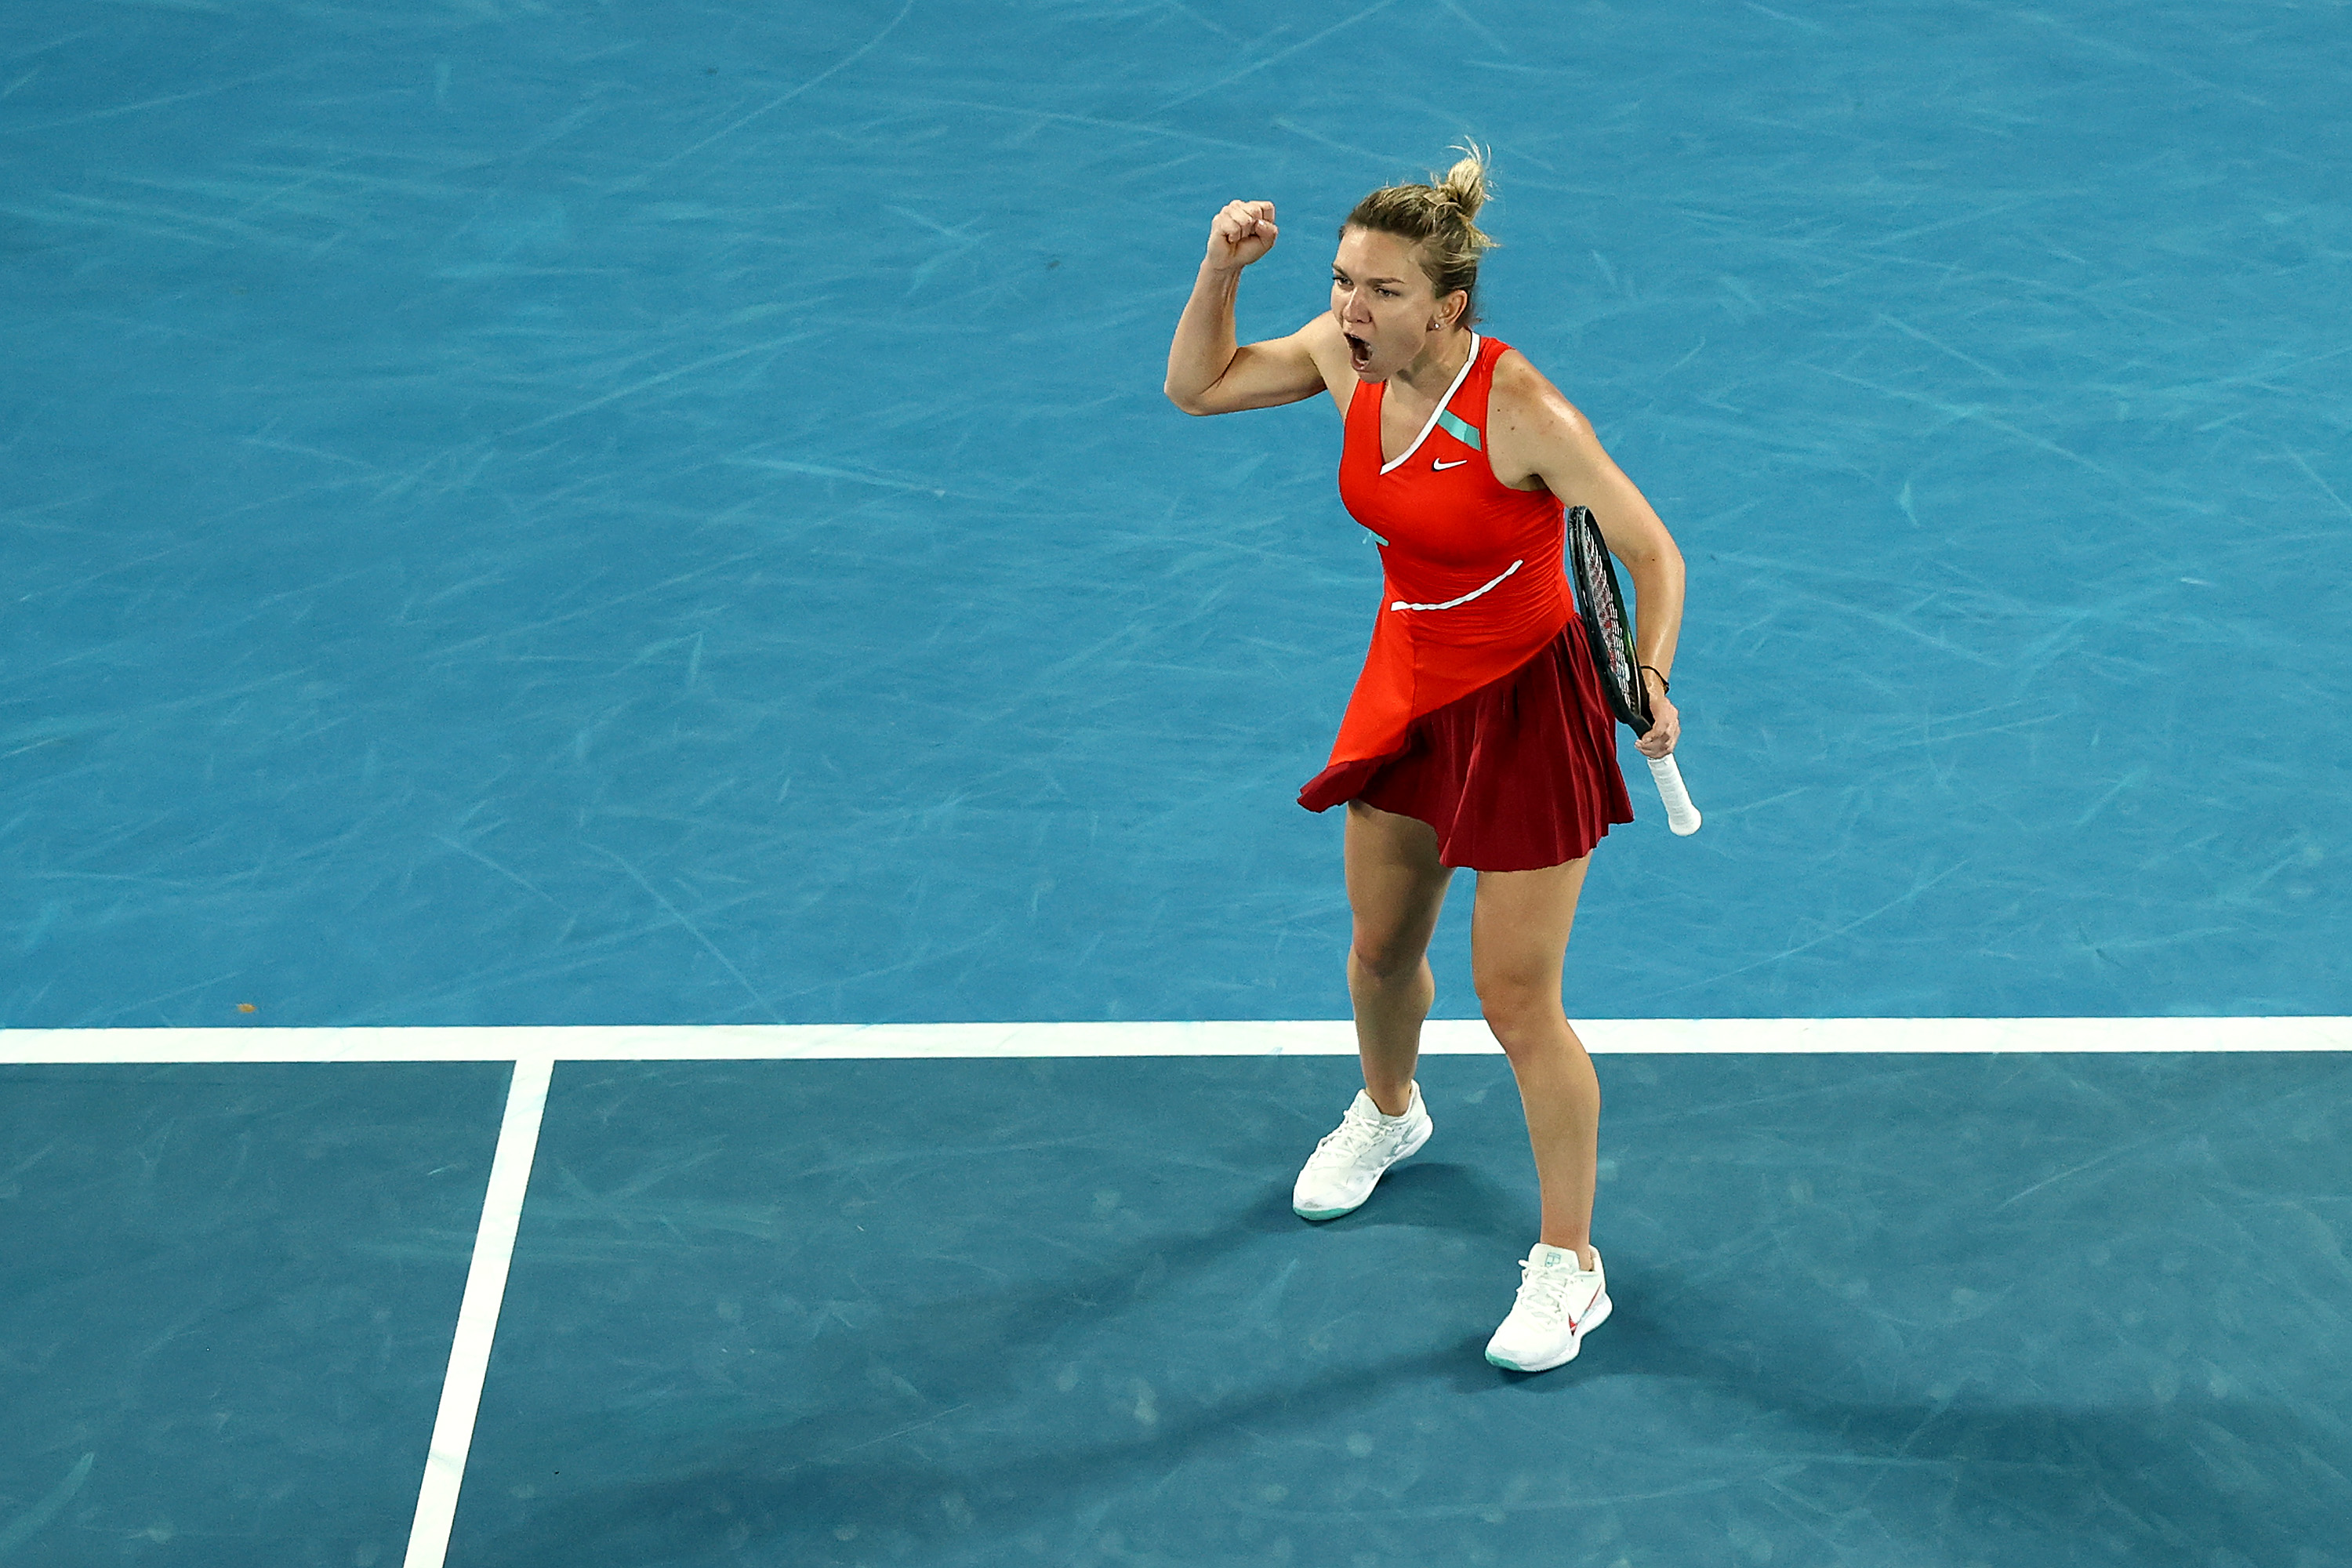 Halep vs Kovinic LIVE: On comeback trail, Simona Halep faces tough battle against Danka Kovinic in Round 3 - Follow Australian Open 2022 LIVE updates